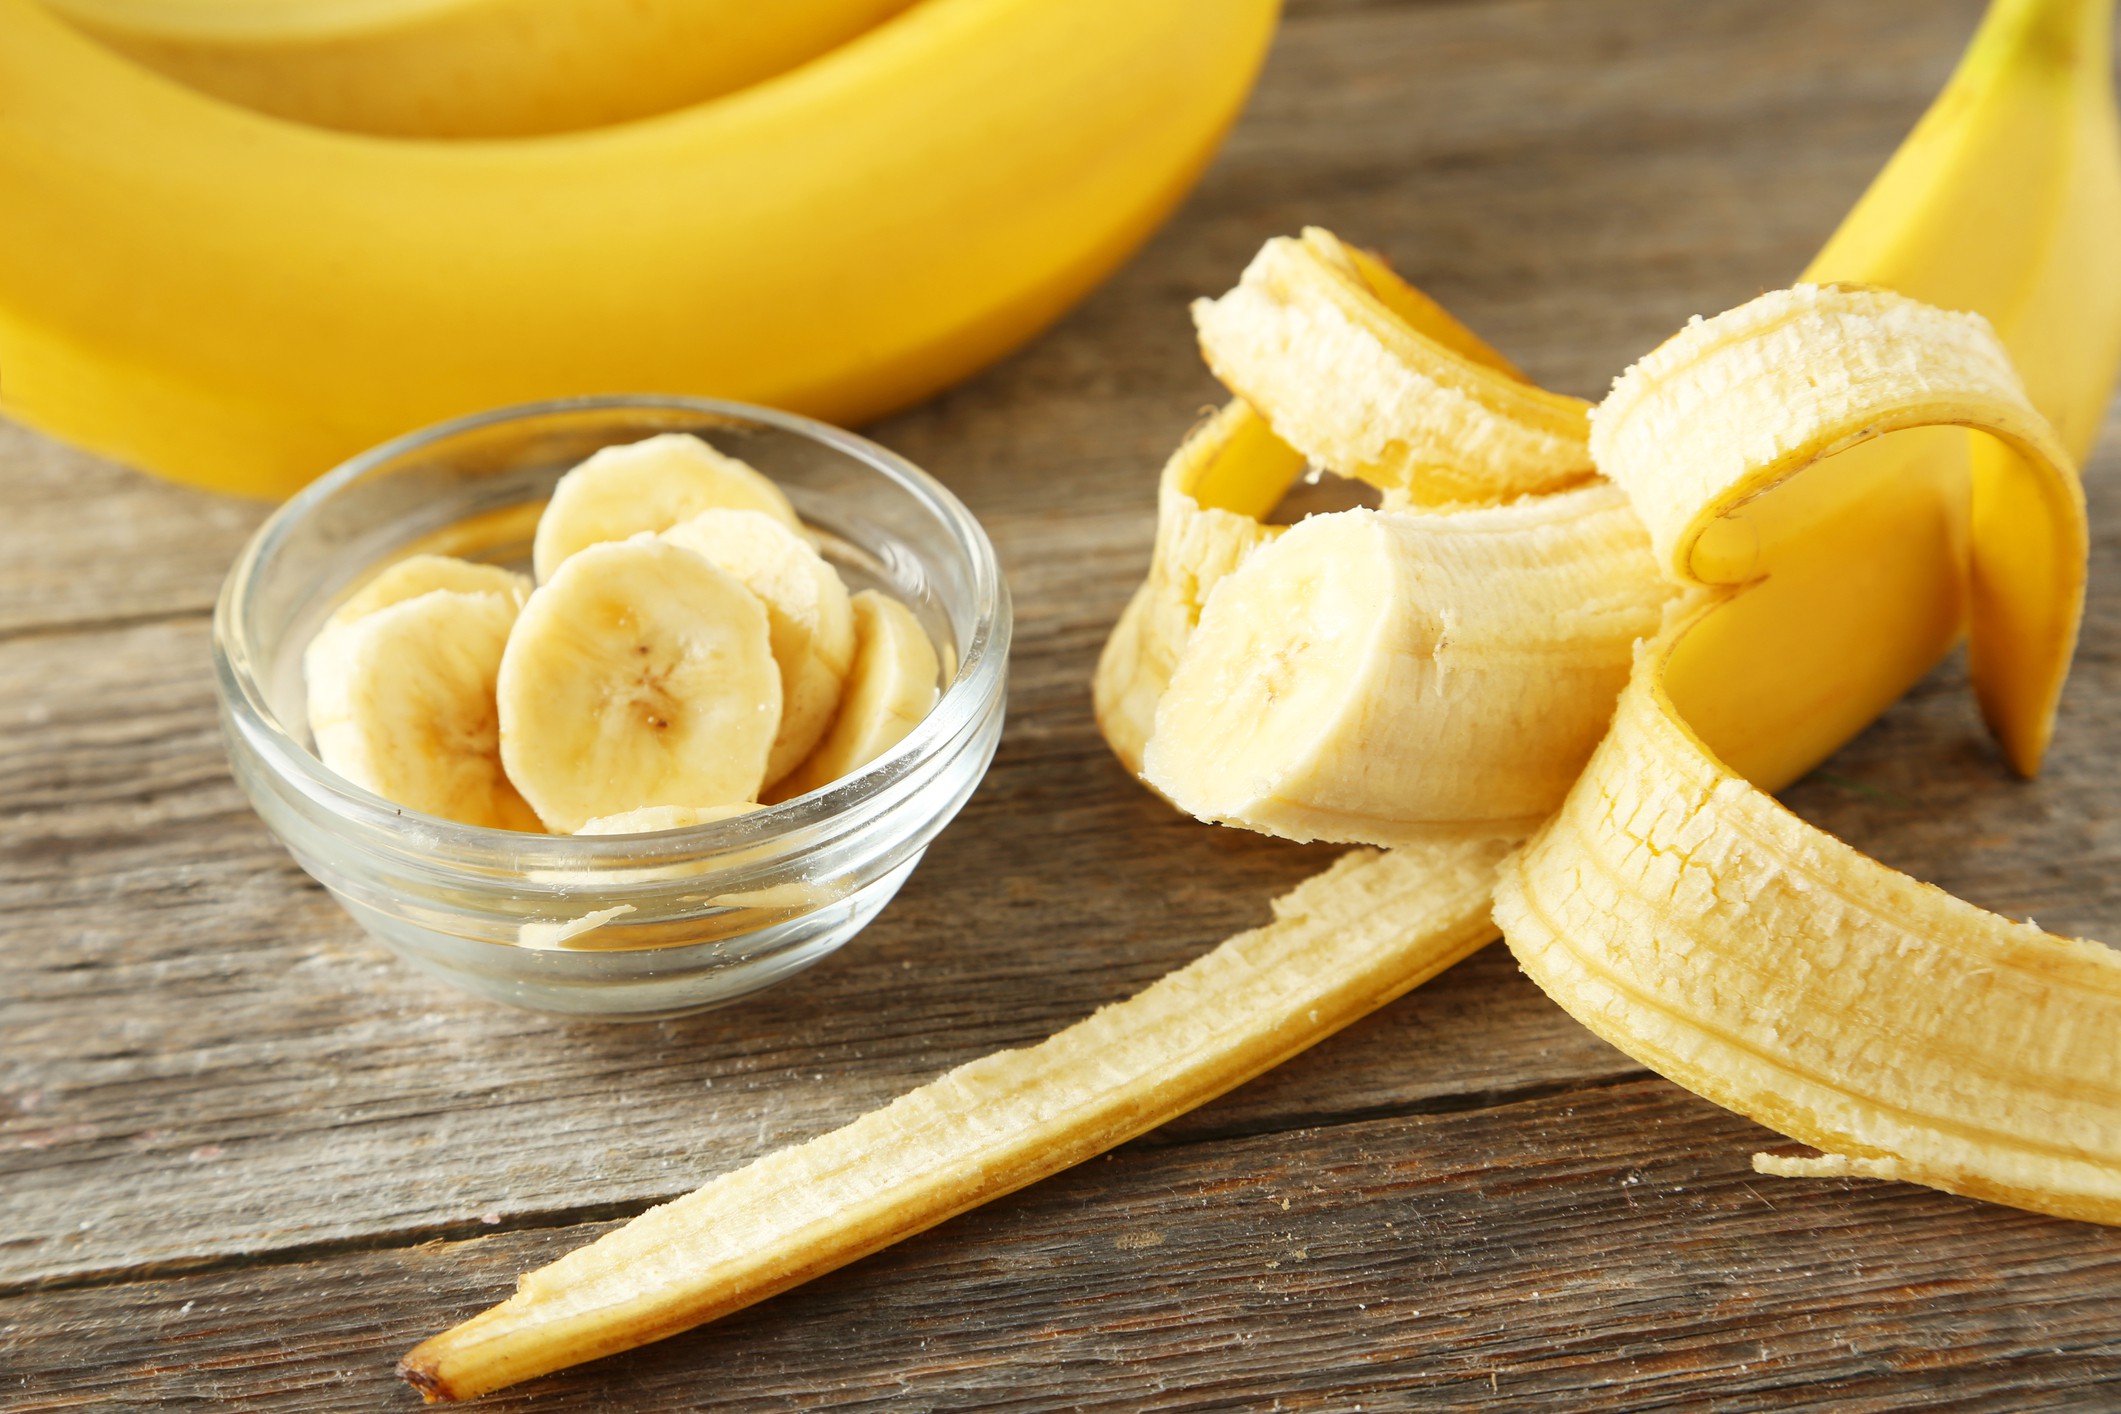 După măr, banana este cel mai consumat fruct din lume